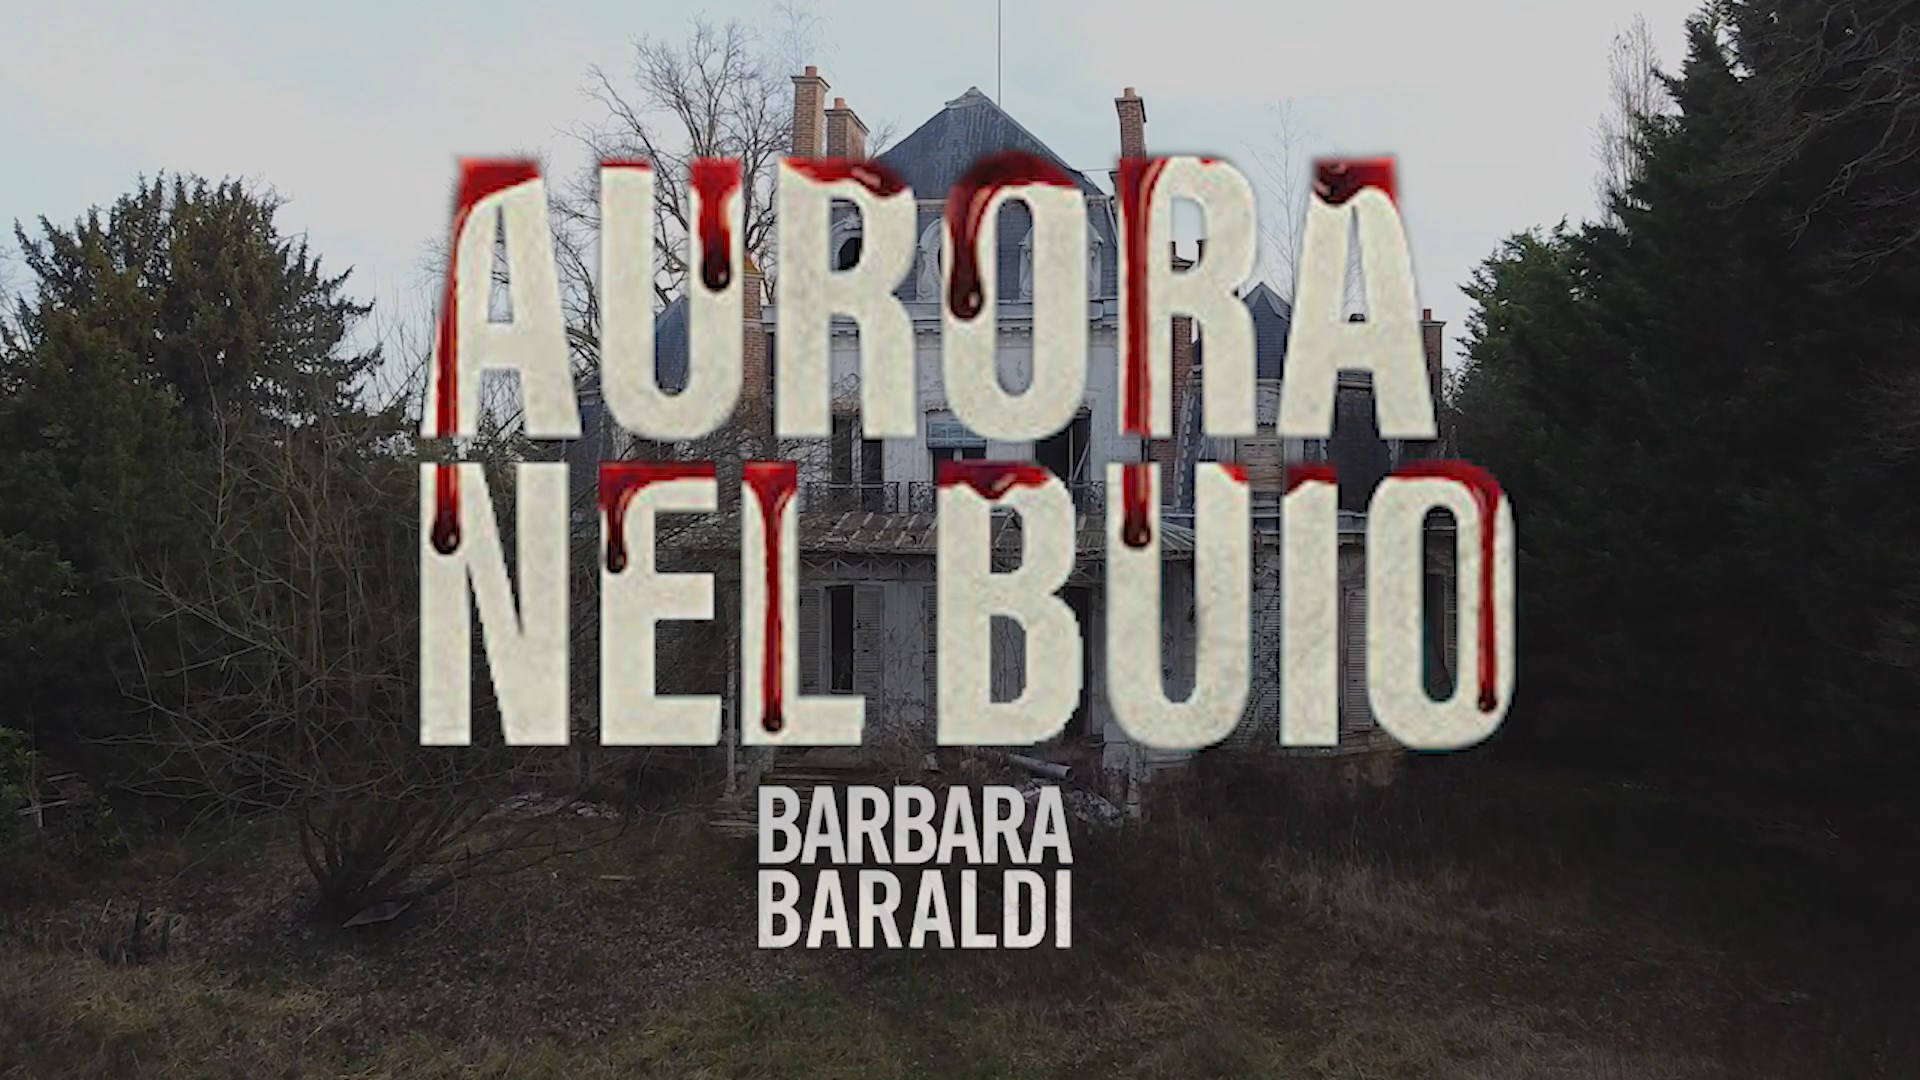 Barbara Baraldi. Aurora nel buio. Booktrailer